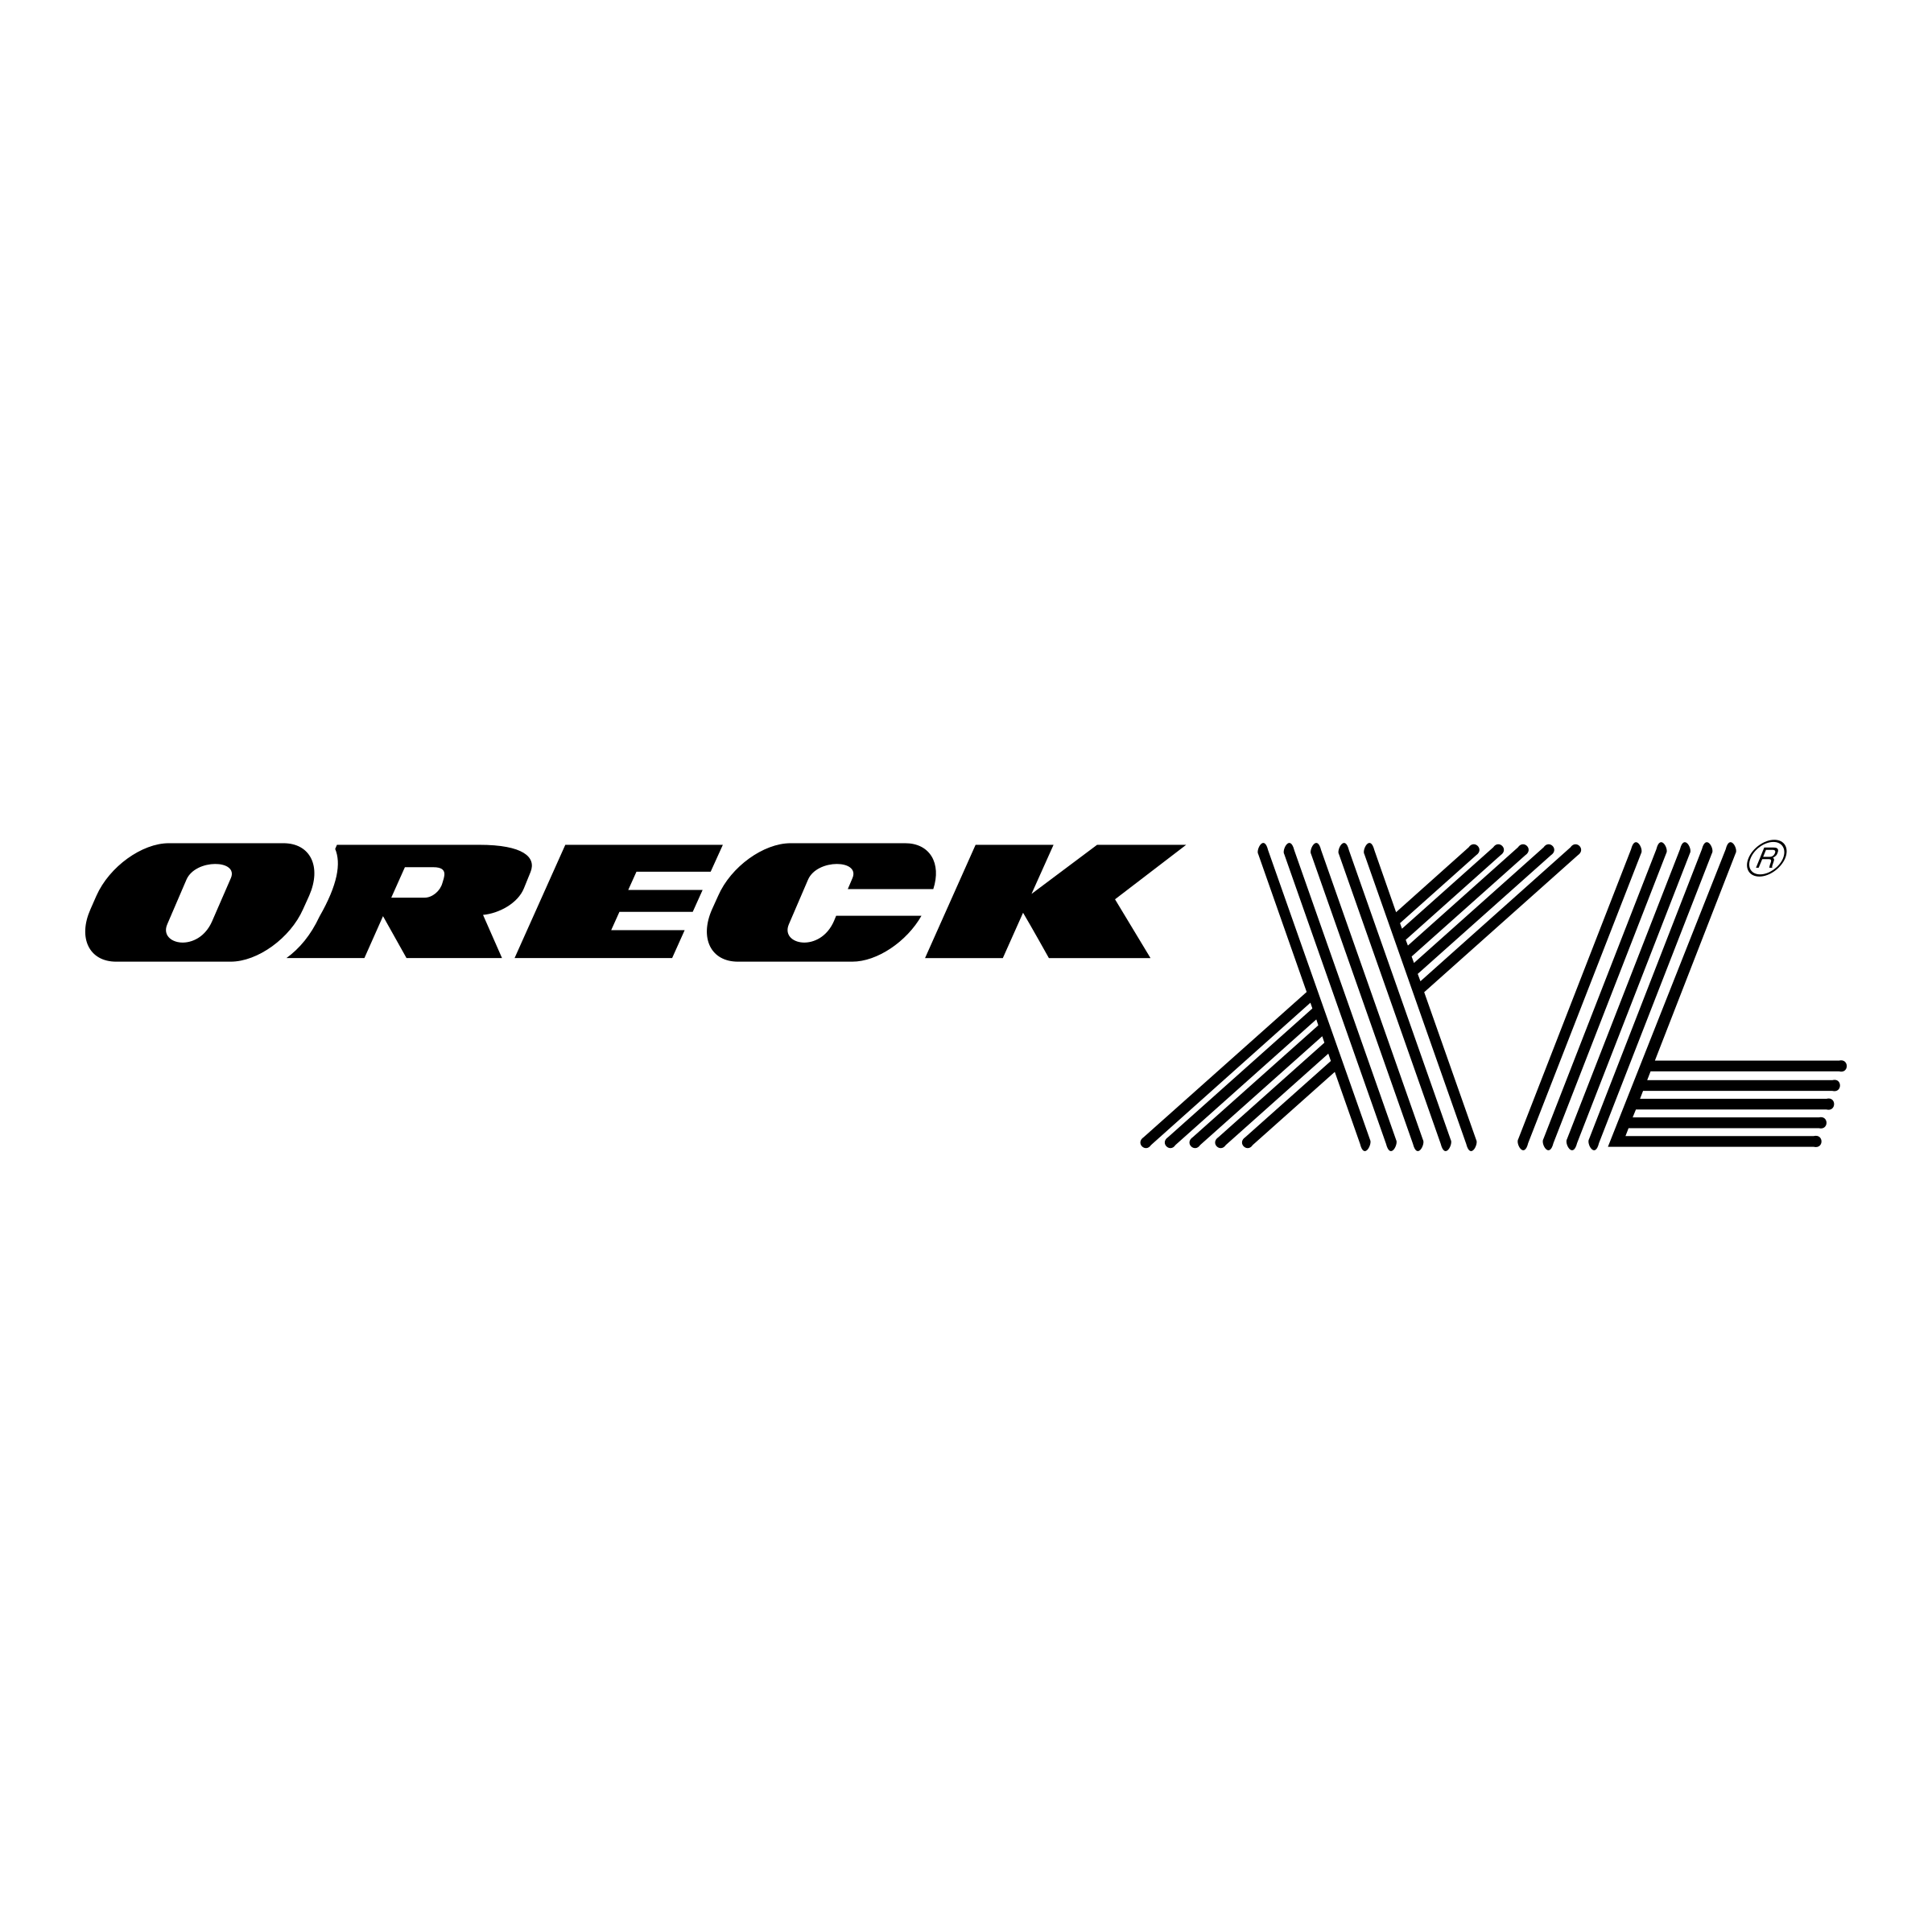 Oreck Logo - Oreck XL Logo PNG Transparent & SVG Vector - Freebie Supply